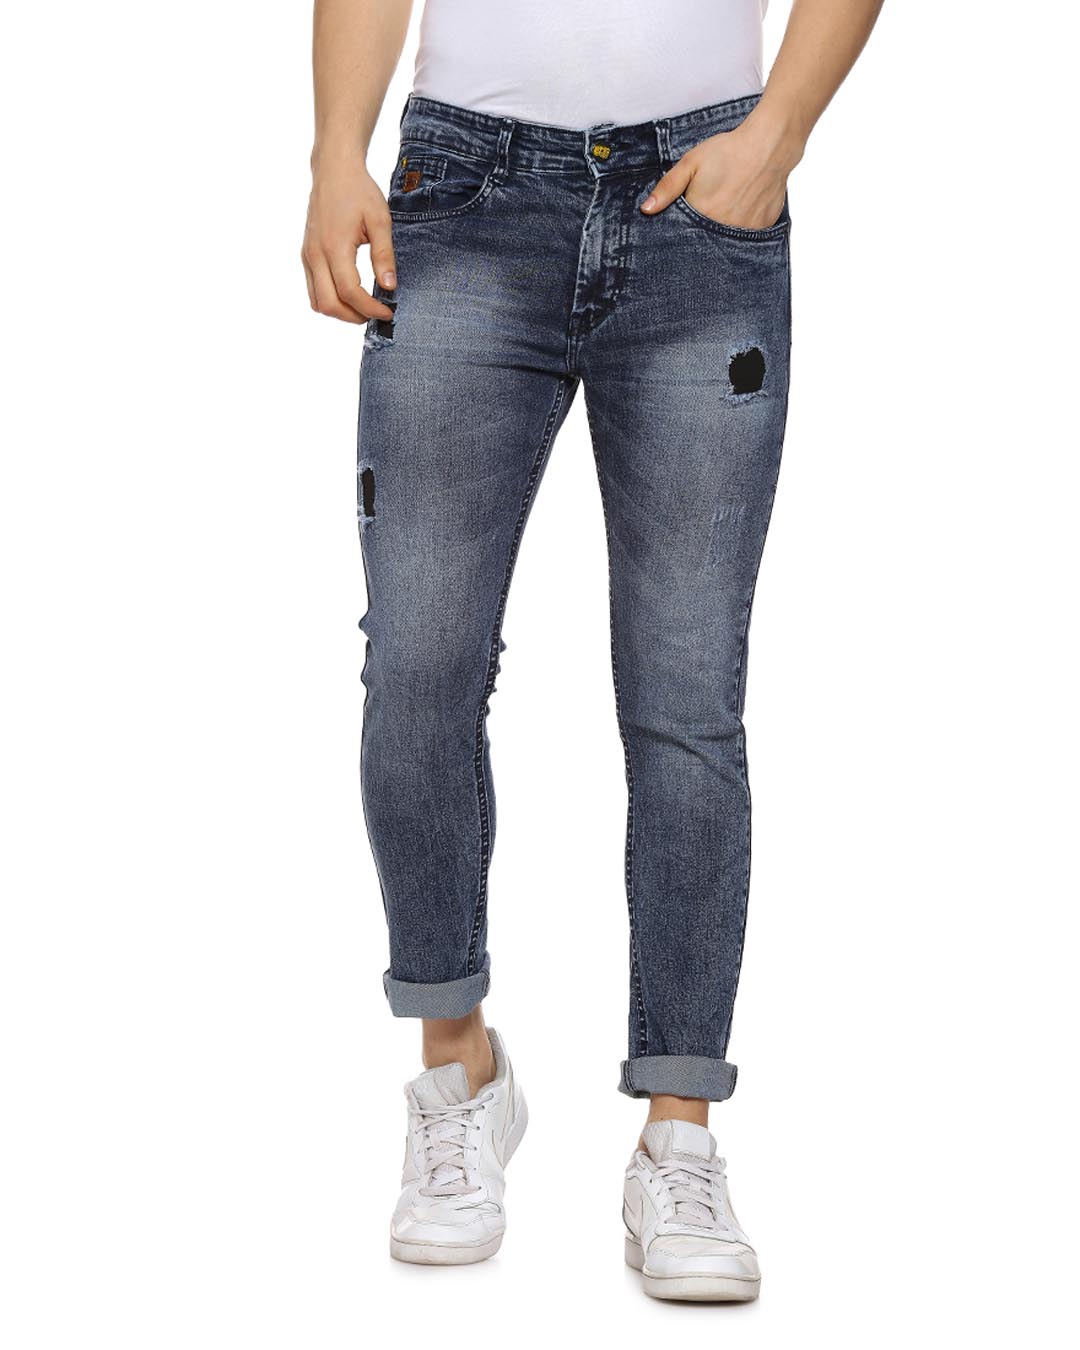 Buy Men's Slim Blue Torn Jeans Online at Bewakoof